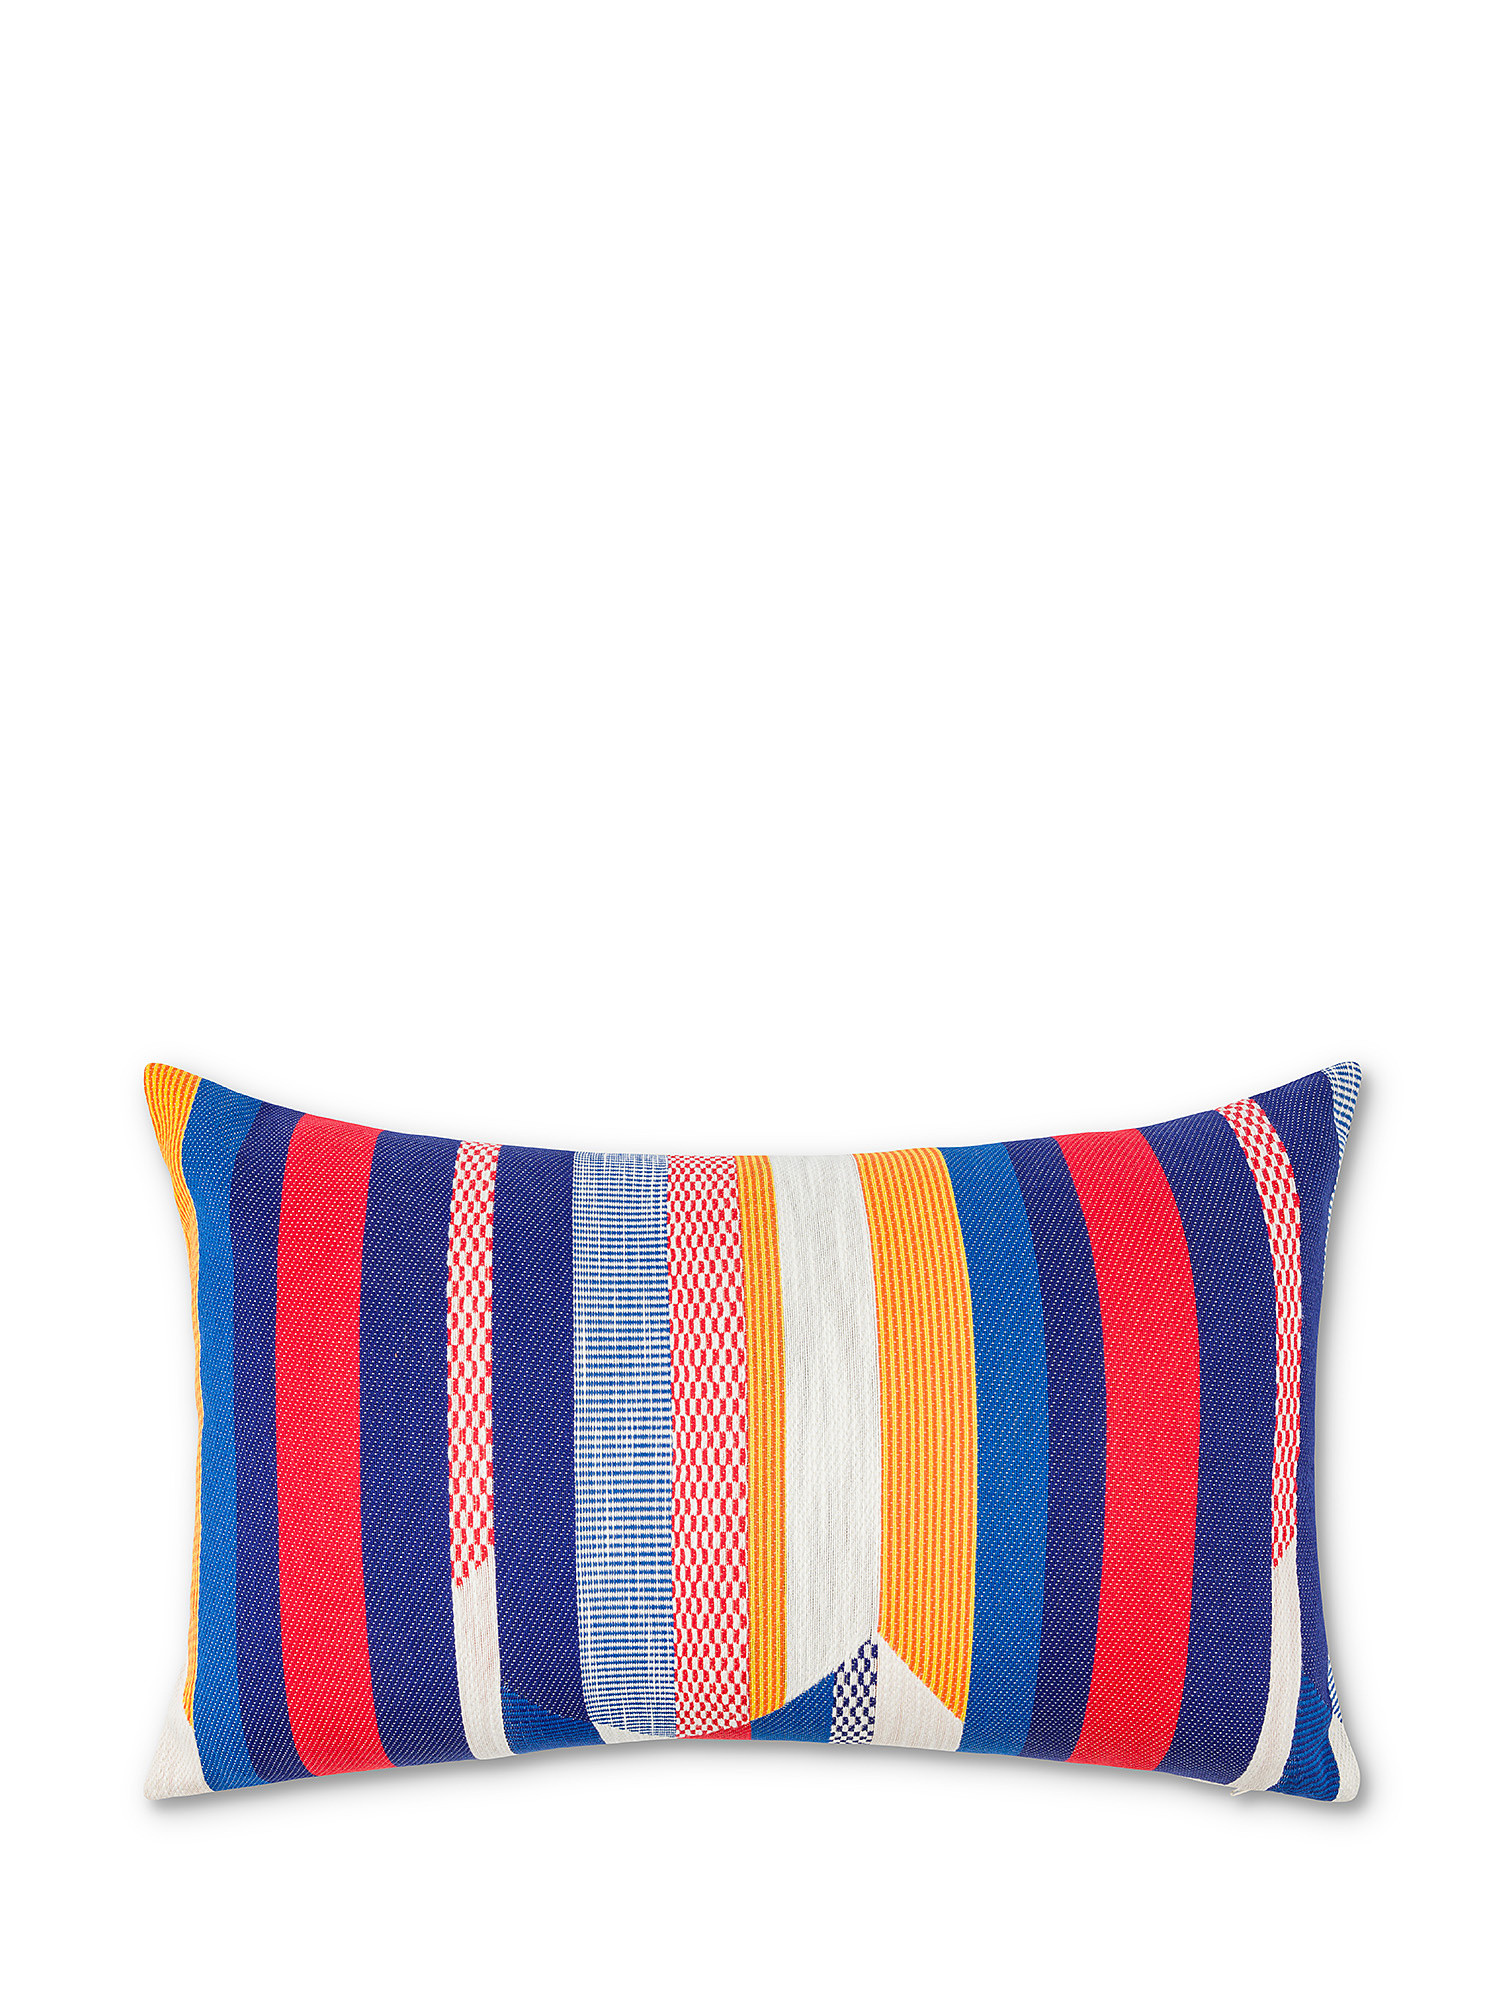 Geometric motif fabric cushion 35x55cm, Multicolor, large image number 1